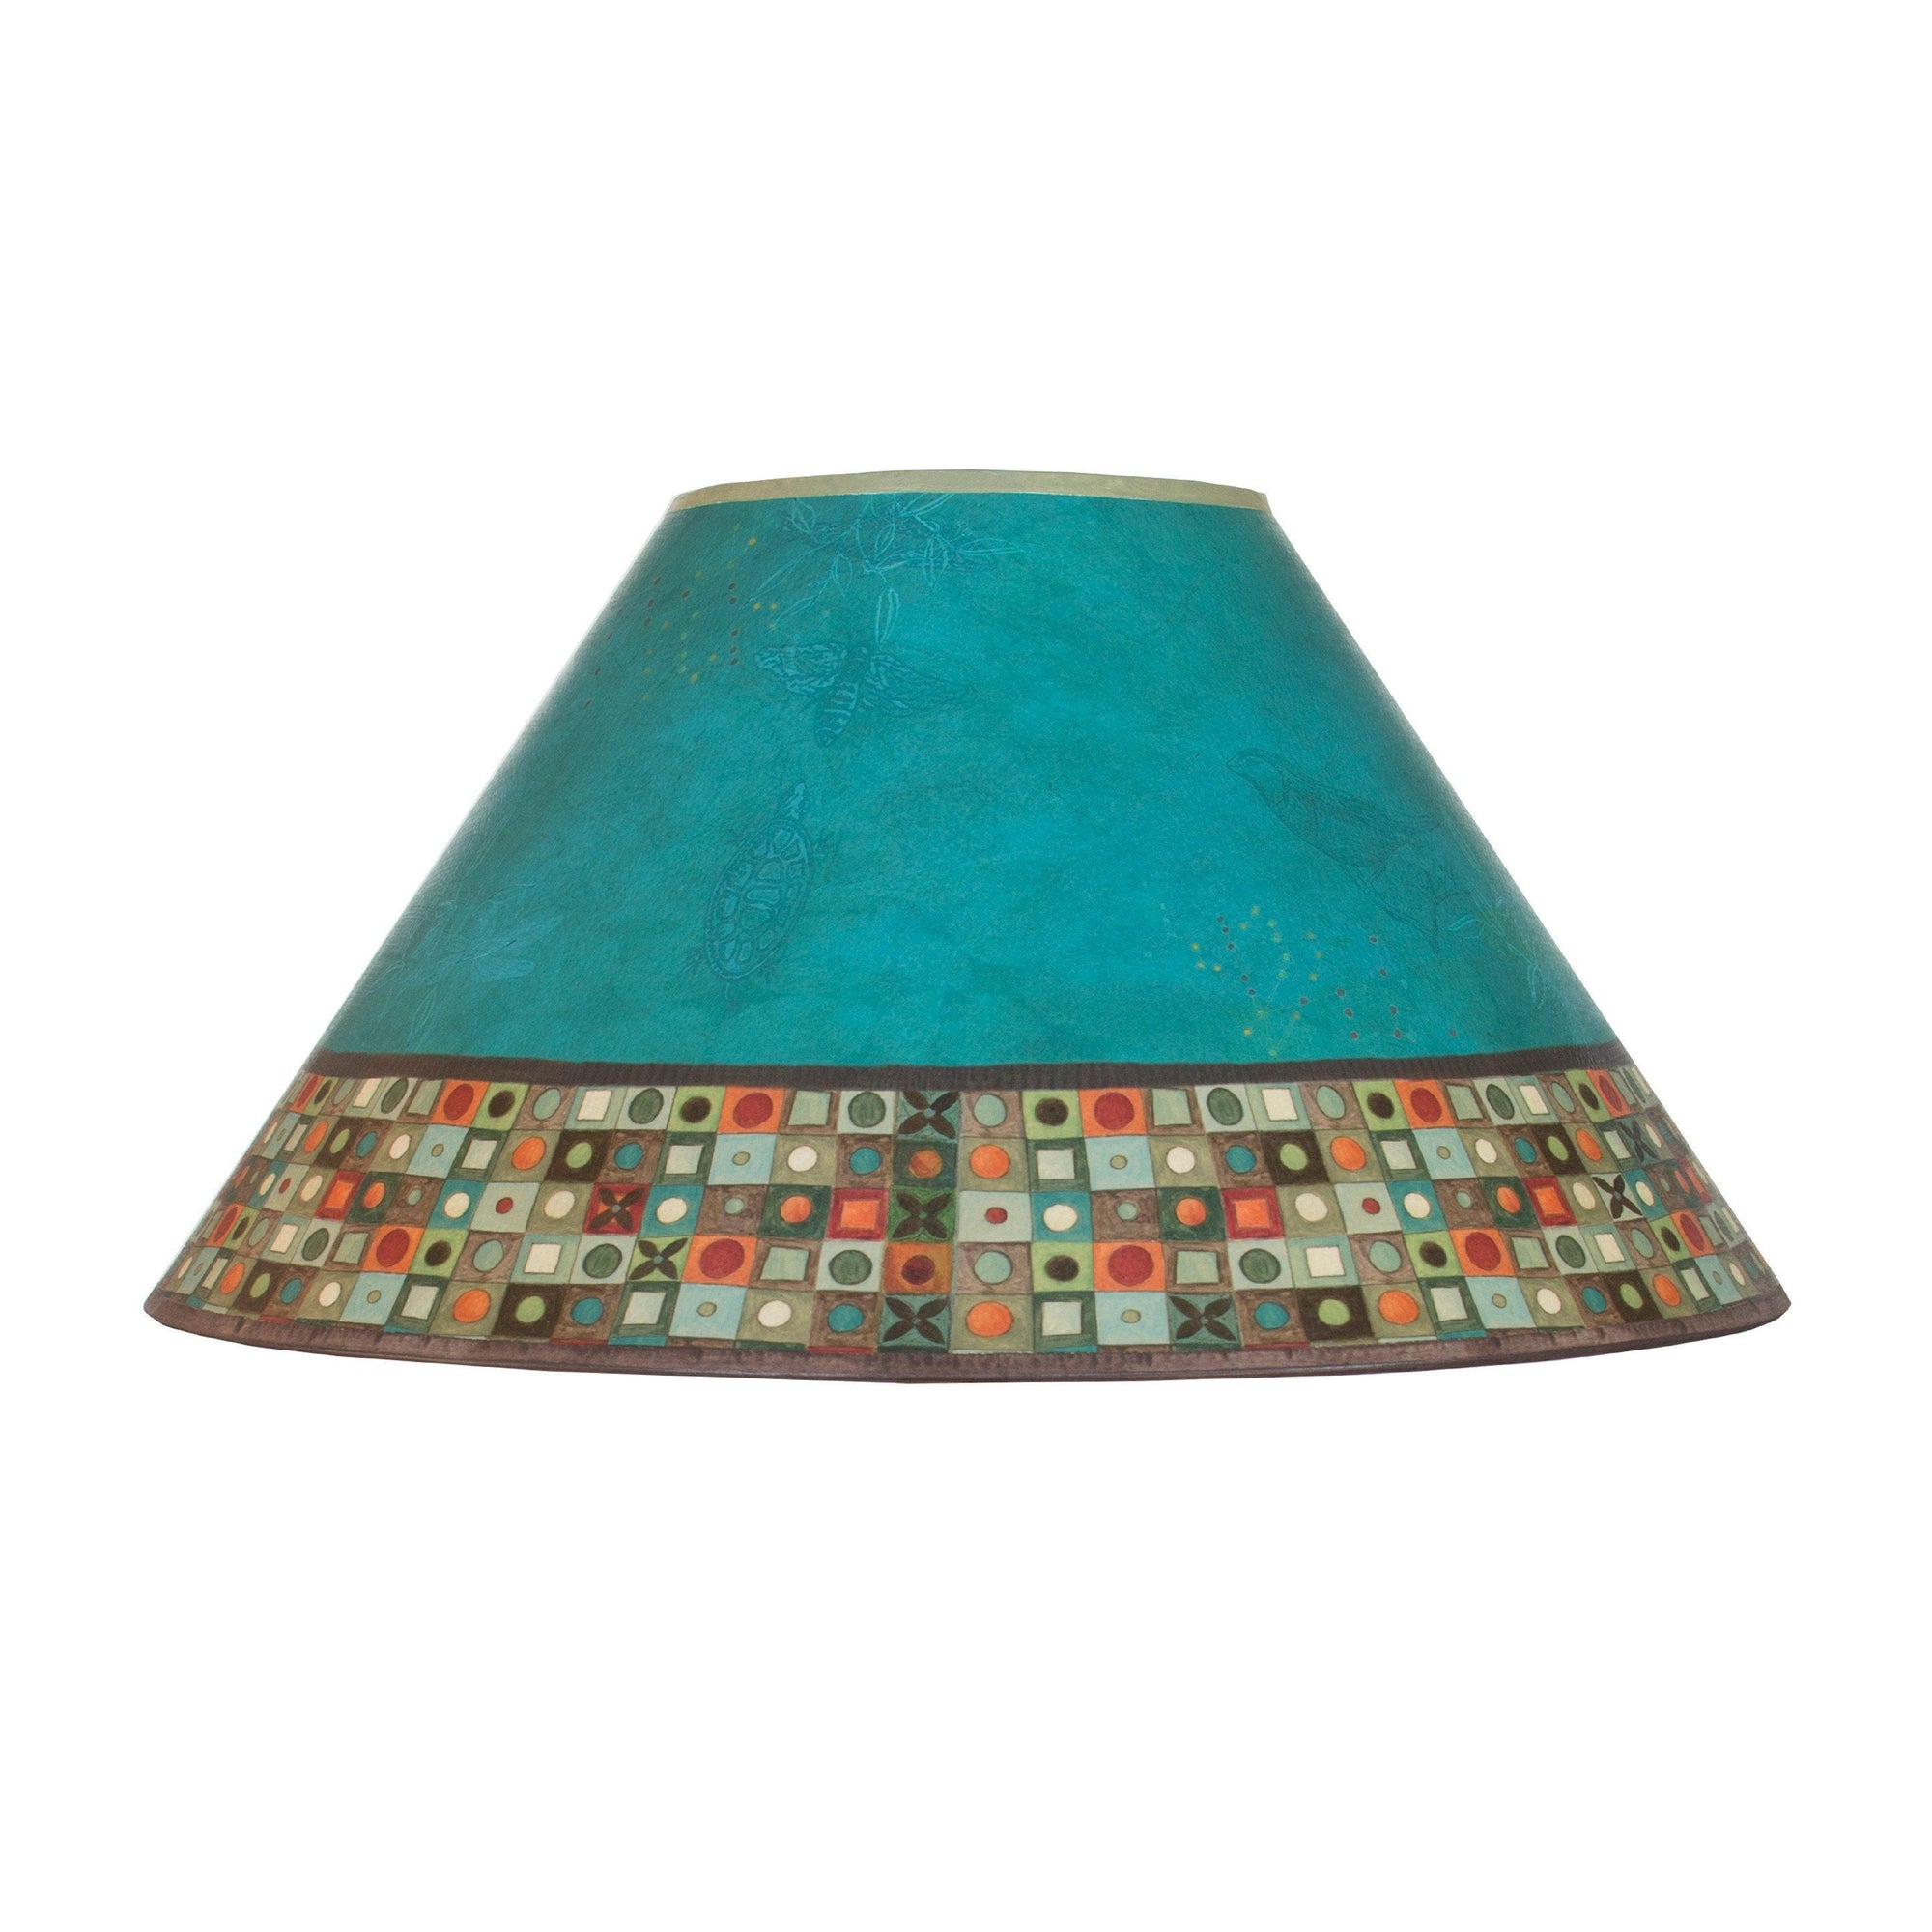 Janna Ugone & Co Lamp Shades Large Conical Lamp Shade in Jade Mosaic